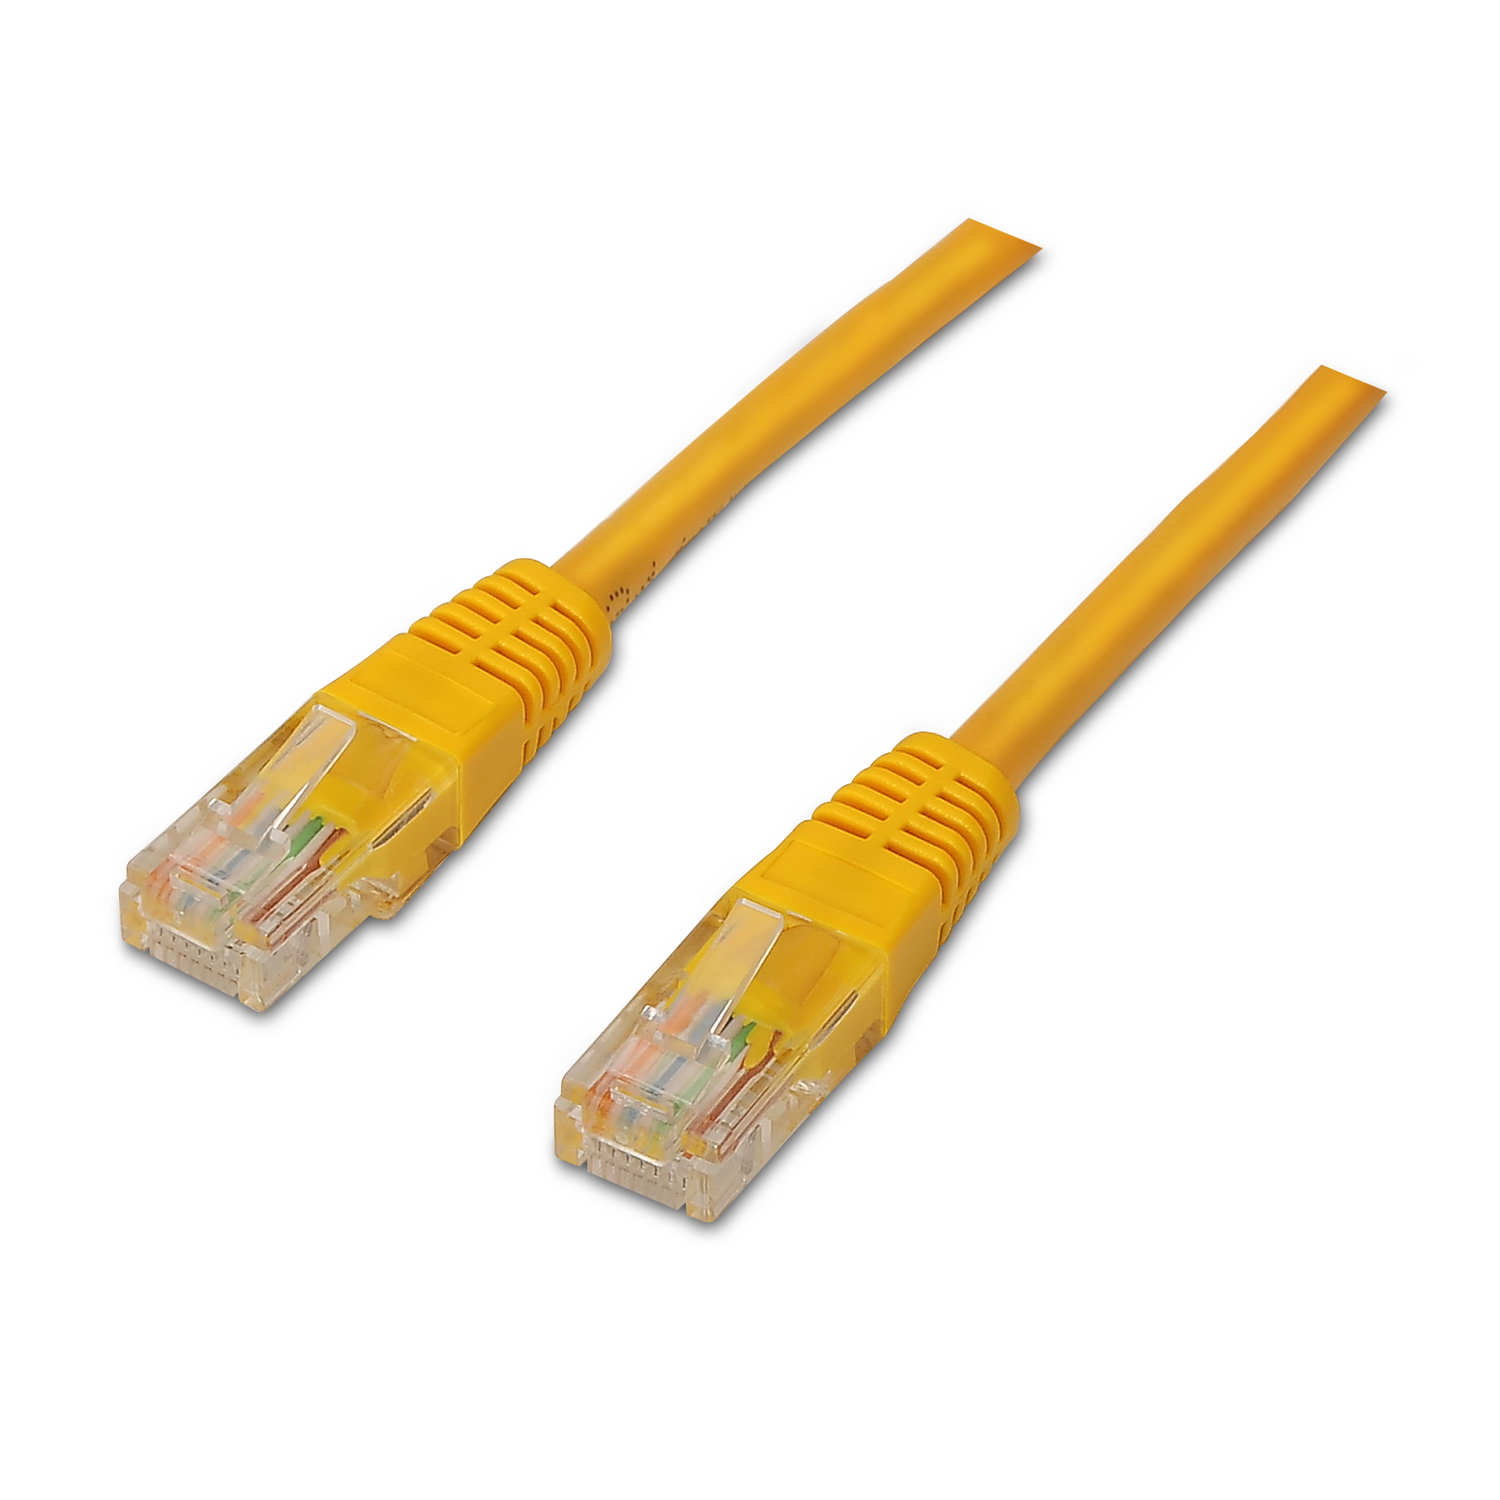 Cable de red latiguillo RJ45 Cat.6 AWG24, amarillo, 3.0 metros, Mbit/s - AISENS®